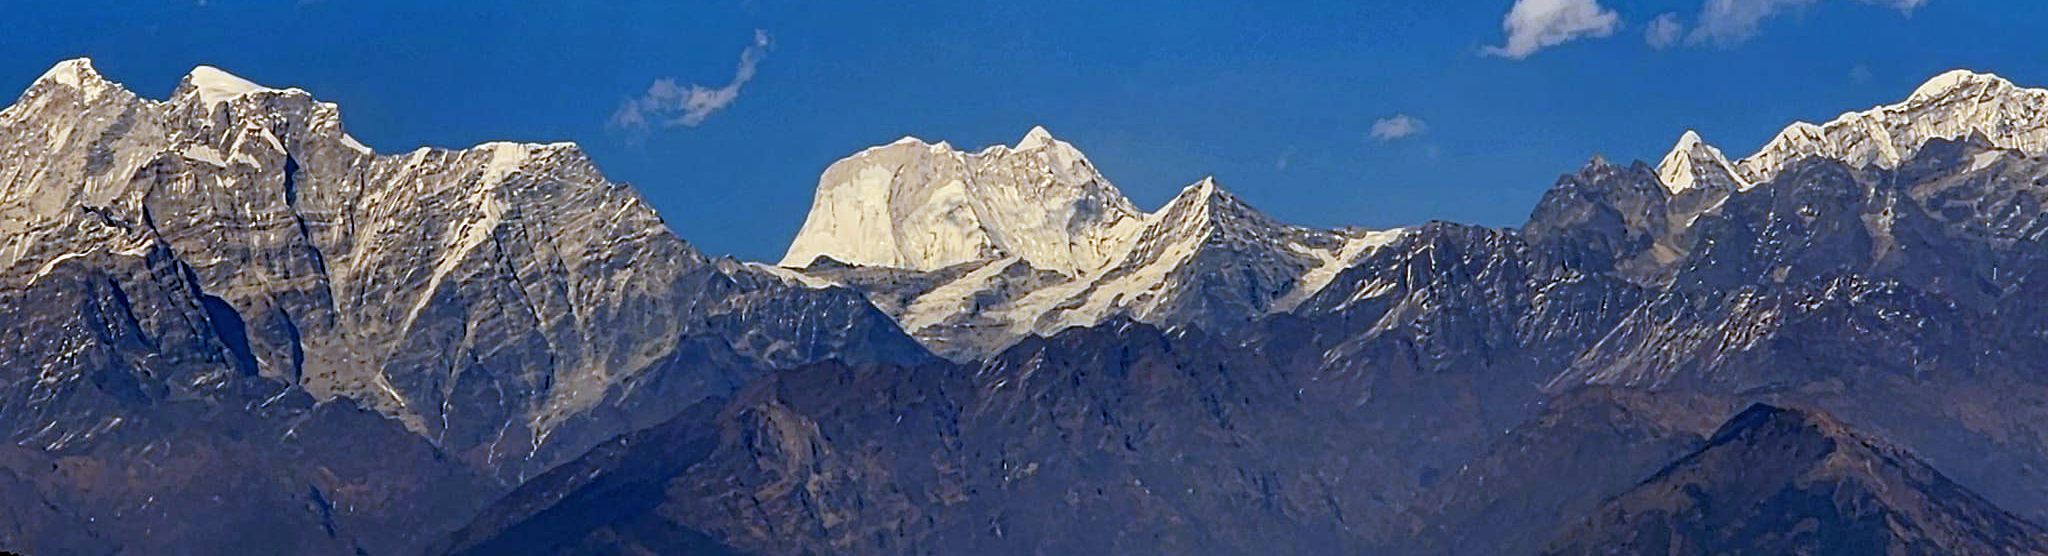 Gauri Shankar ( 7146m ) and Menlungtse